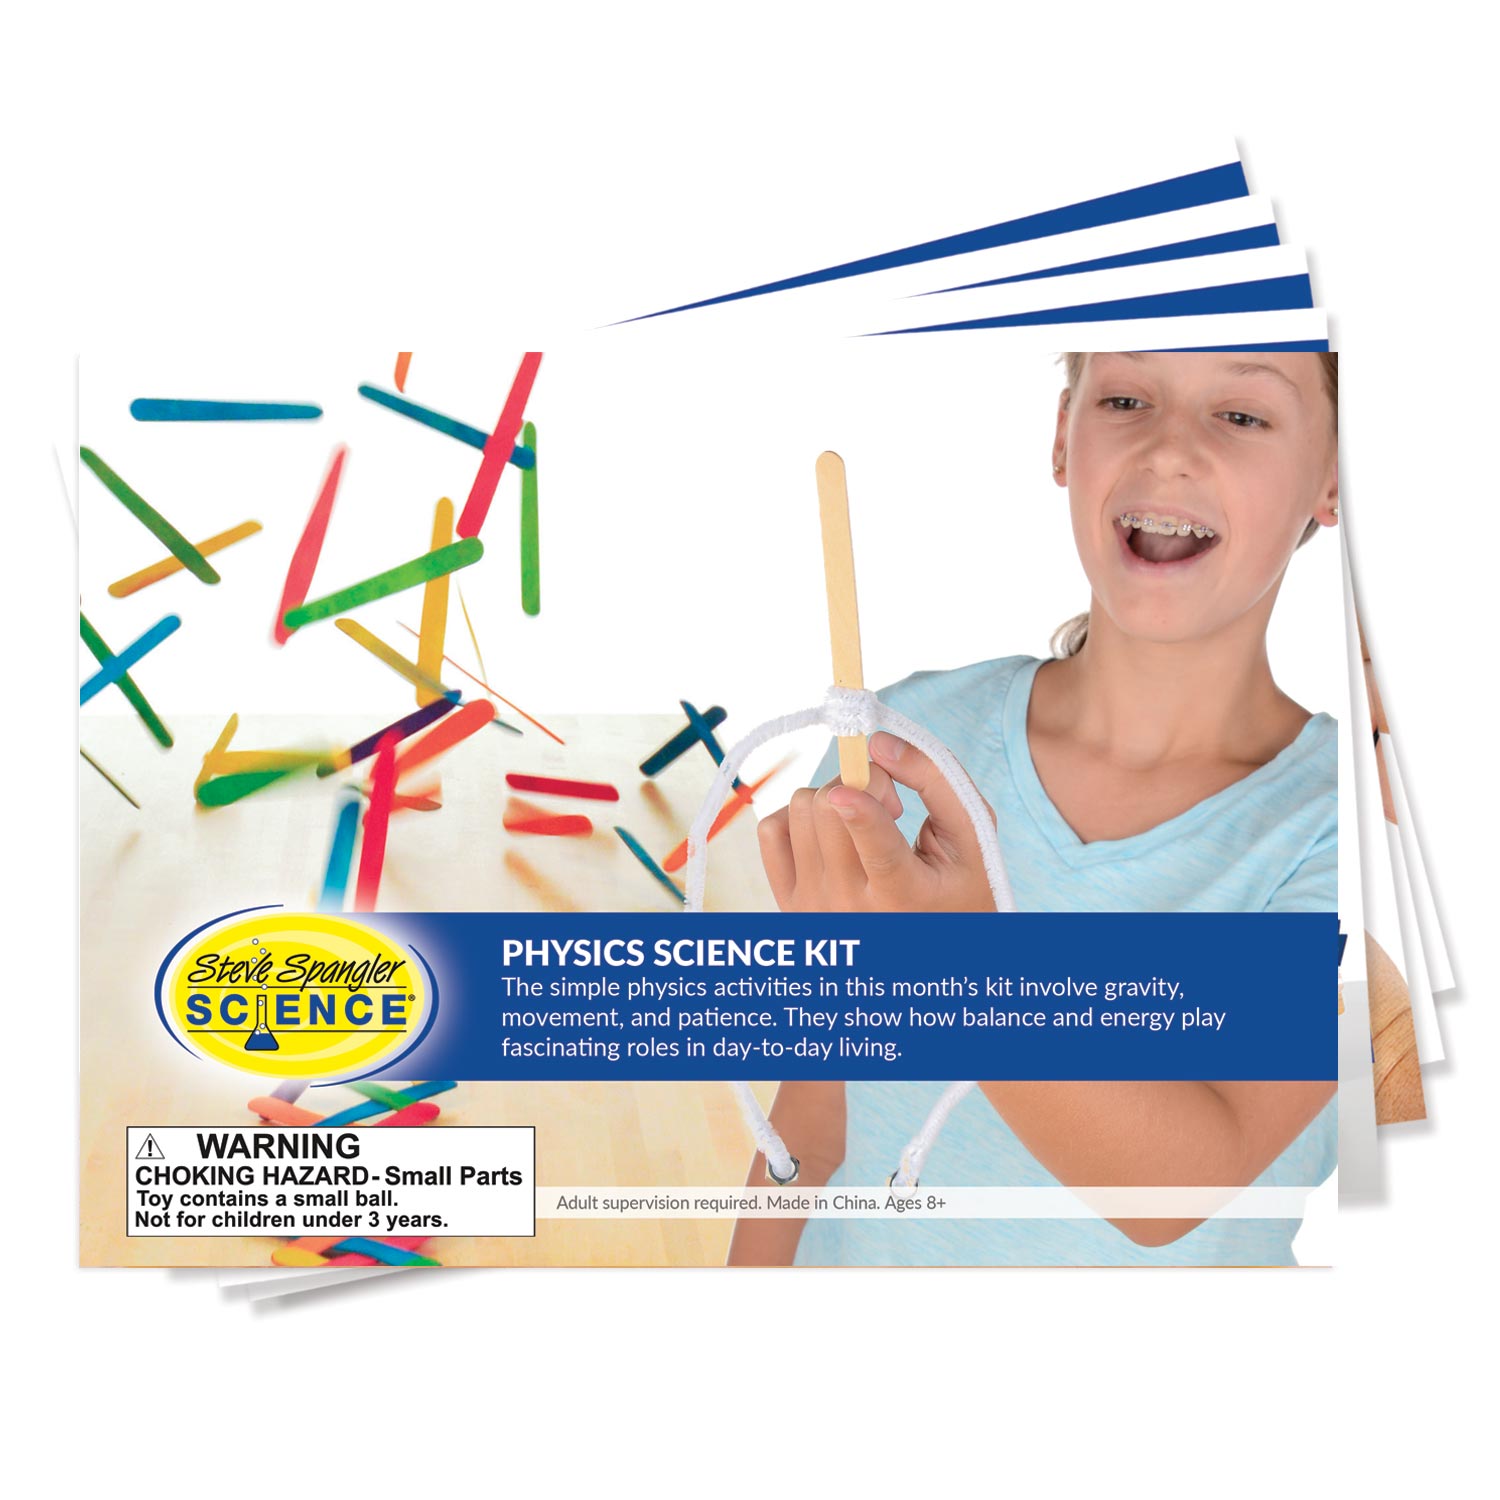 STEM Science Kit - Physics Science Kit